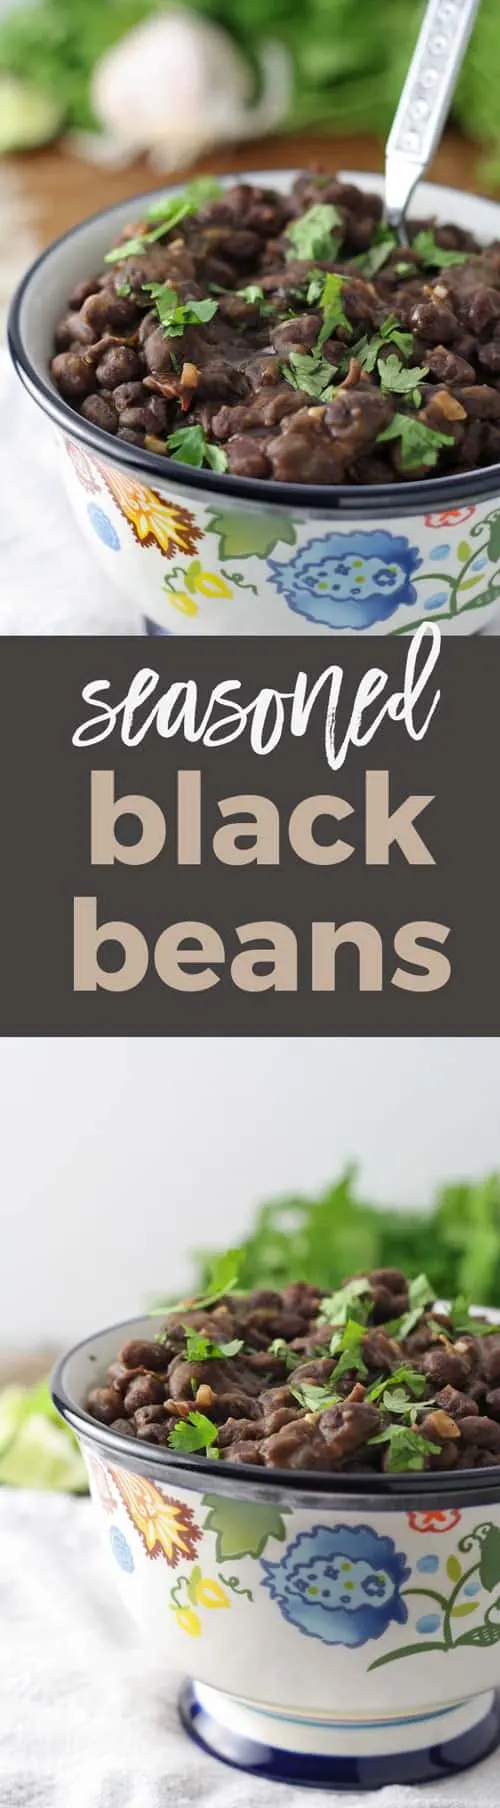 seasoned black beans side dish pin